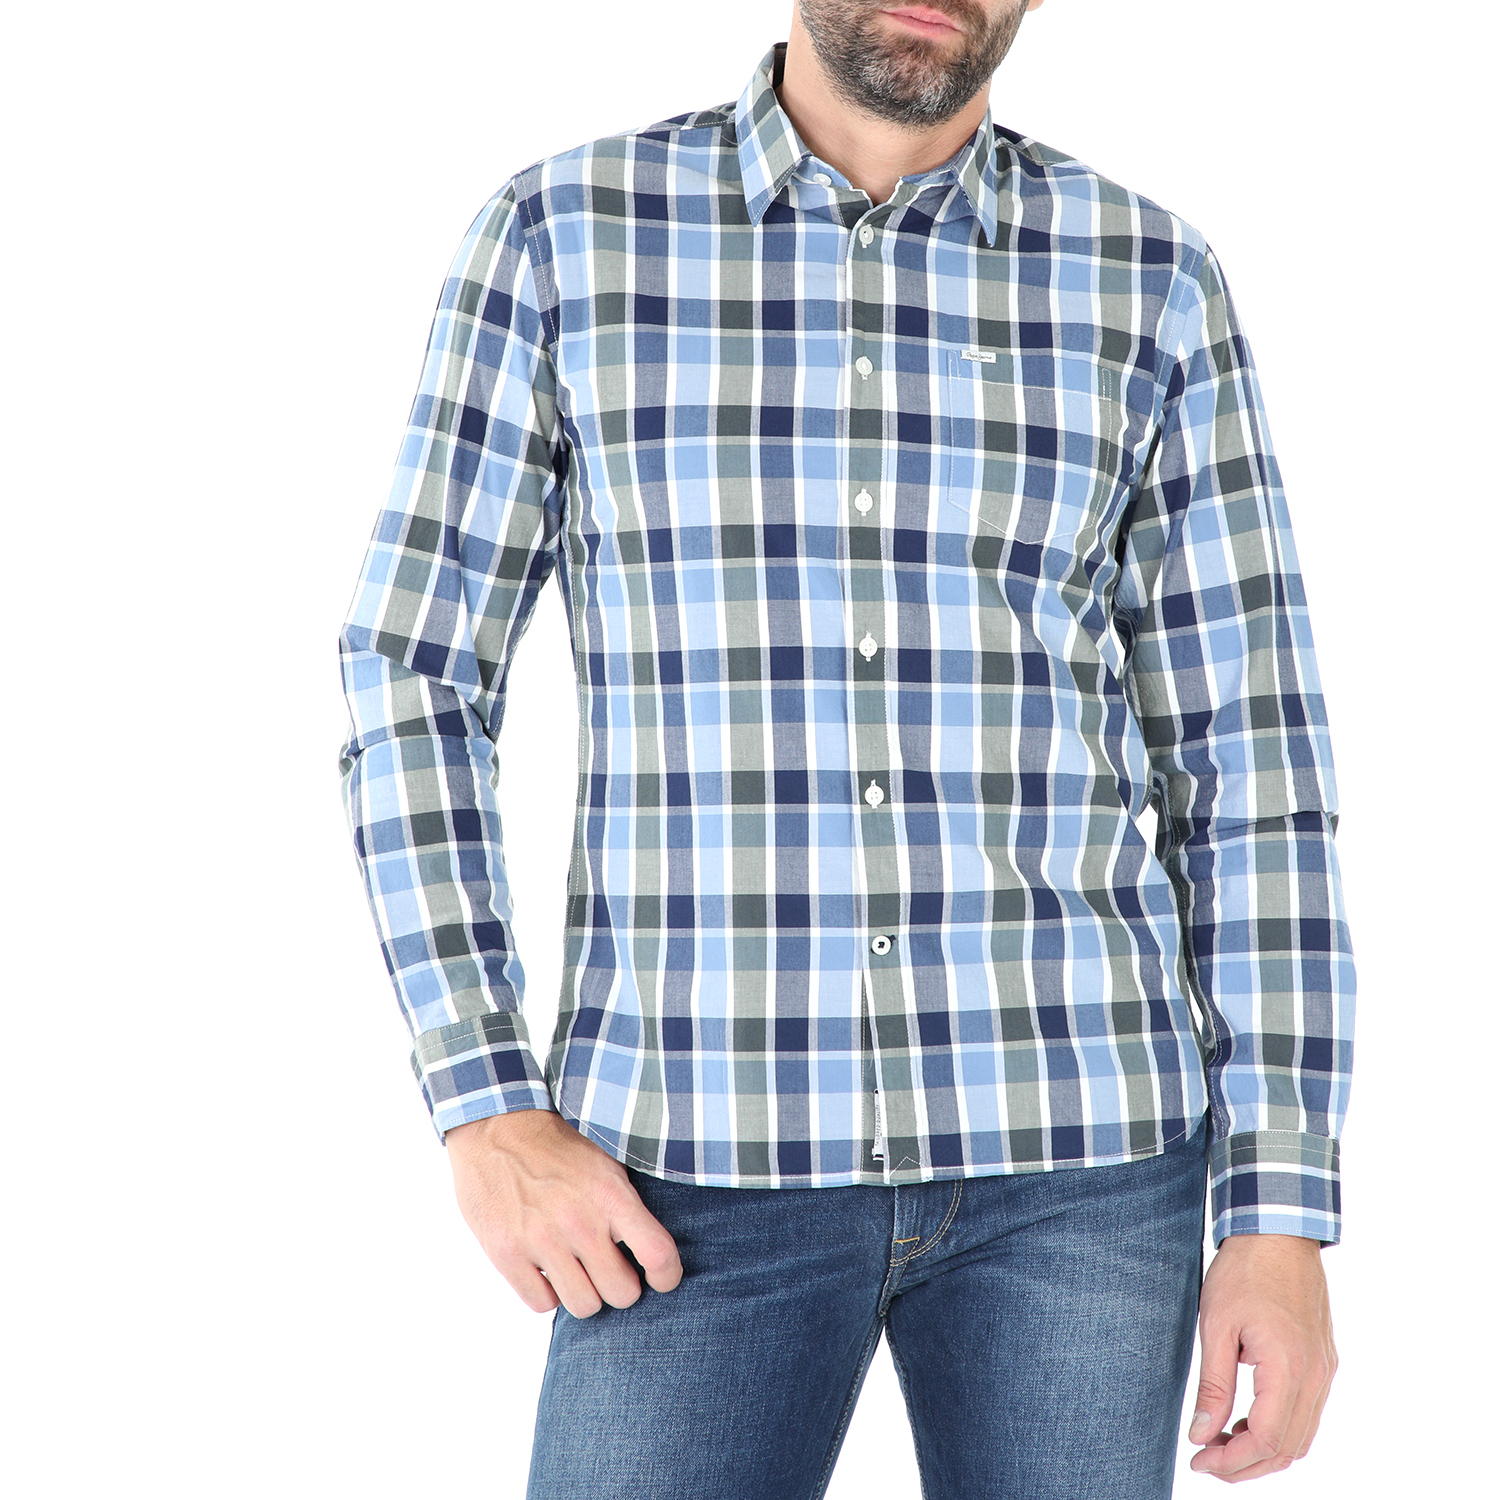 PEPE JEANS - Ανδρικό μακρυμάνικο πουκάμισο PEPE JEANS HARRY μπλέ-καρό